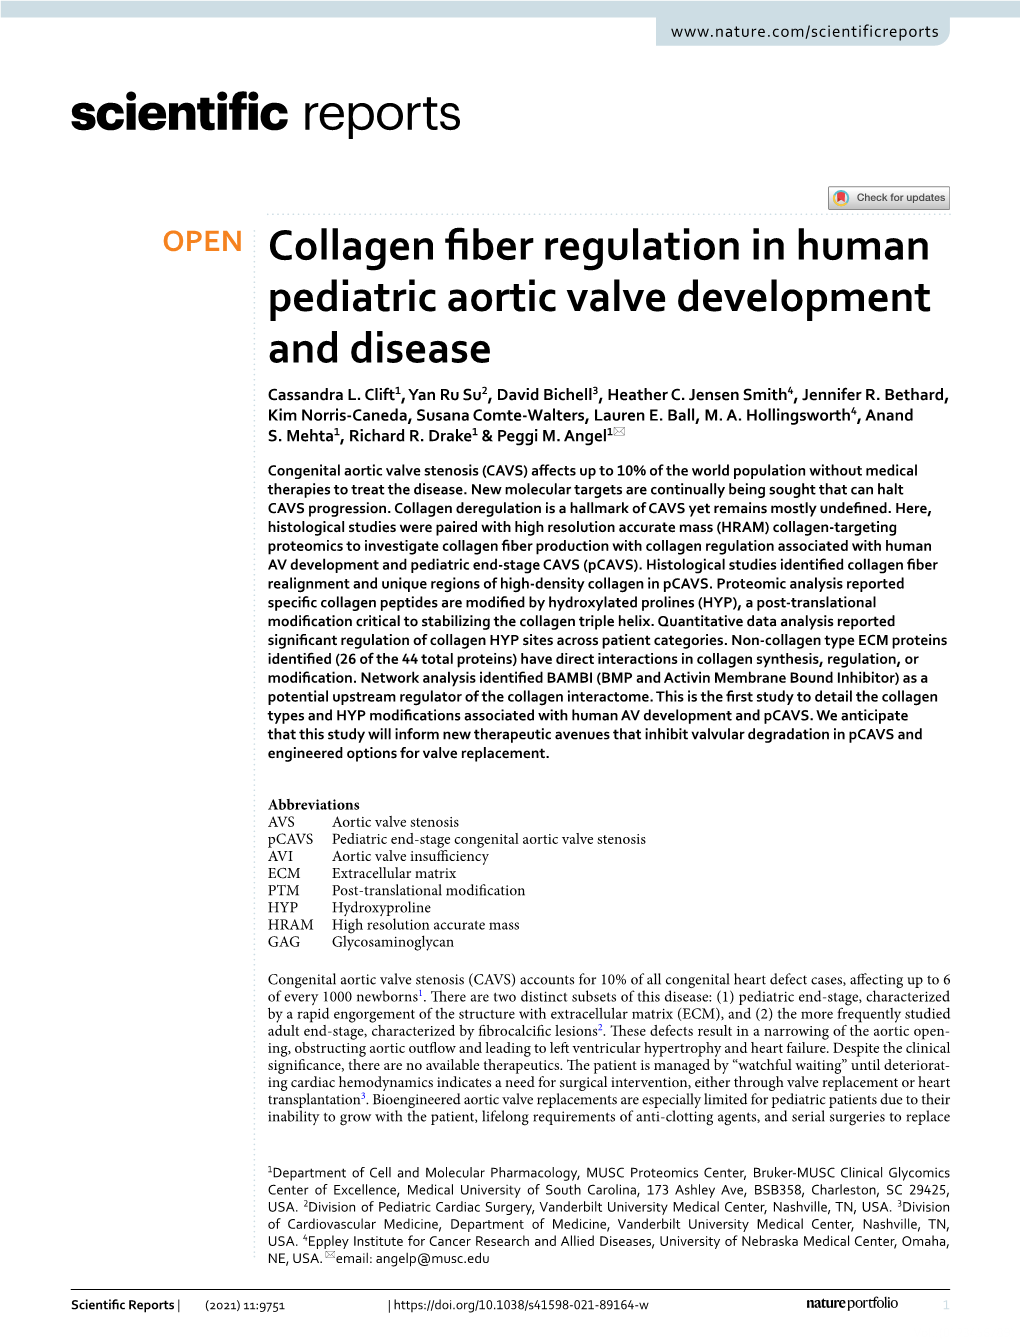 Collagen Fiber Regulation in Human Pediatric Aortic Valve Development